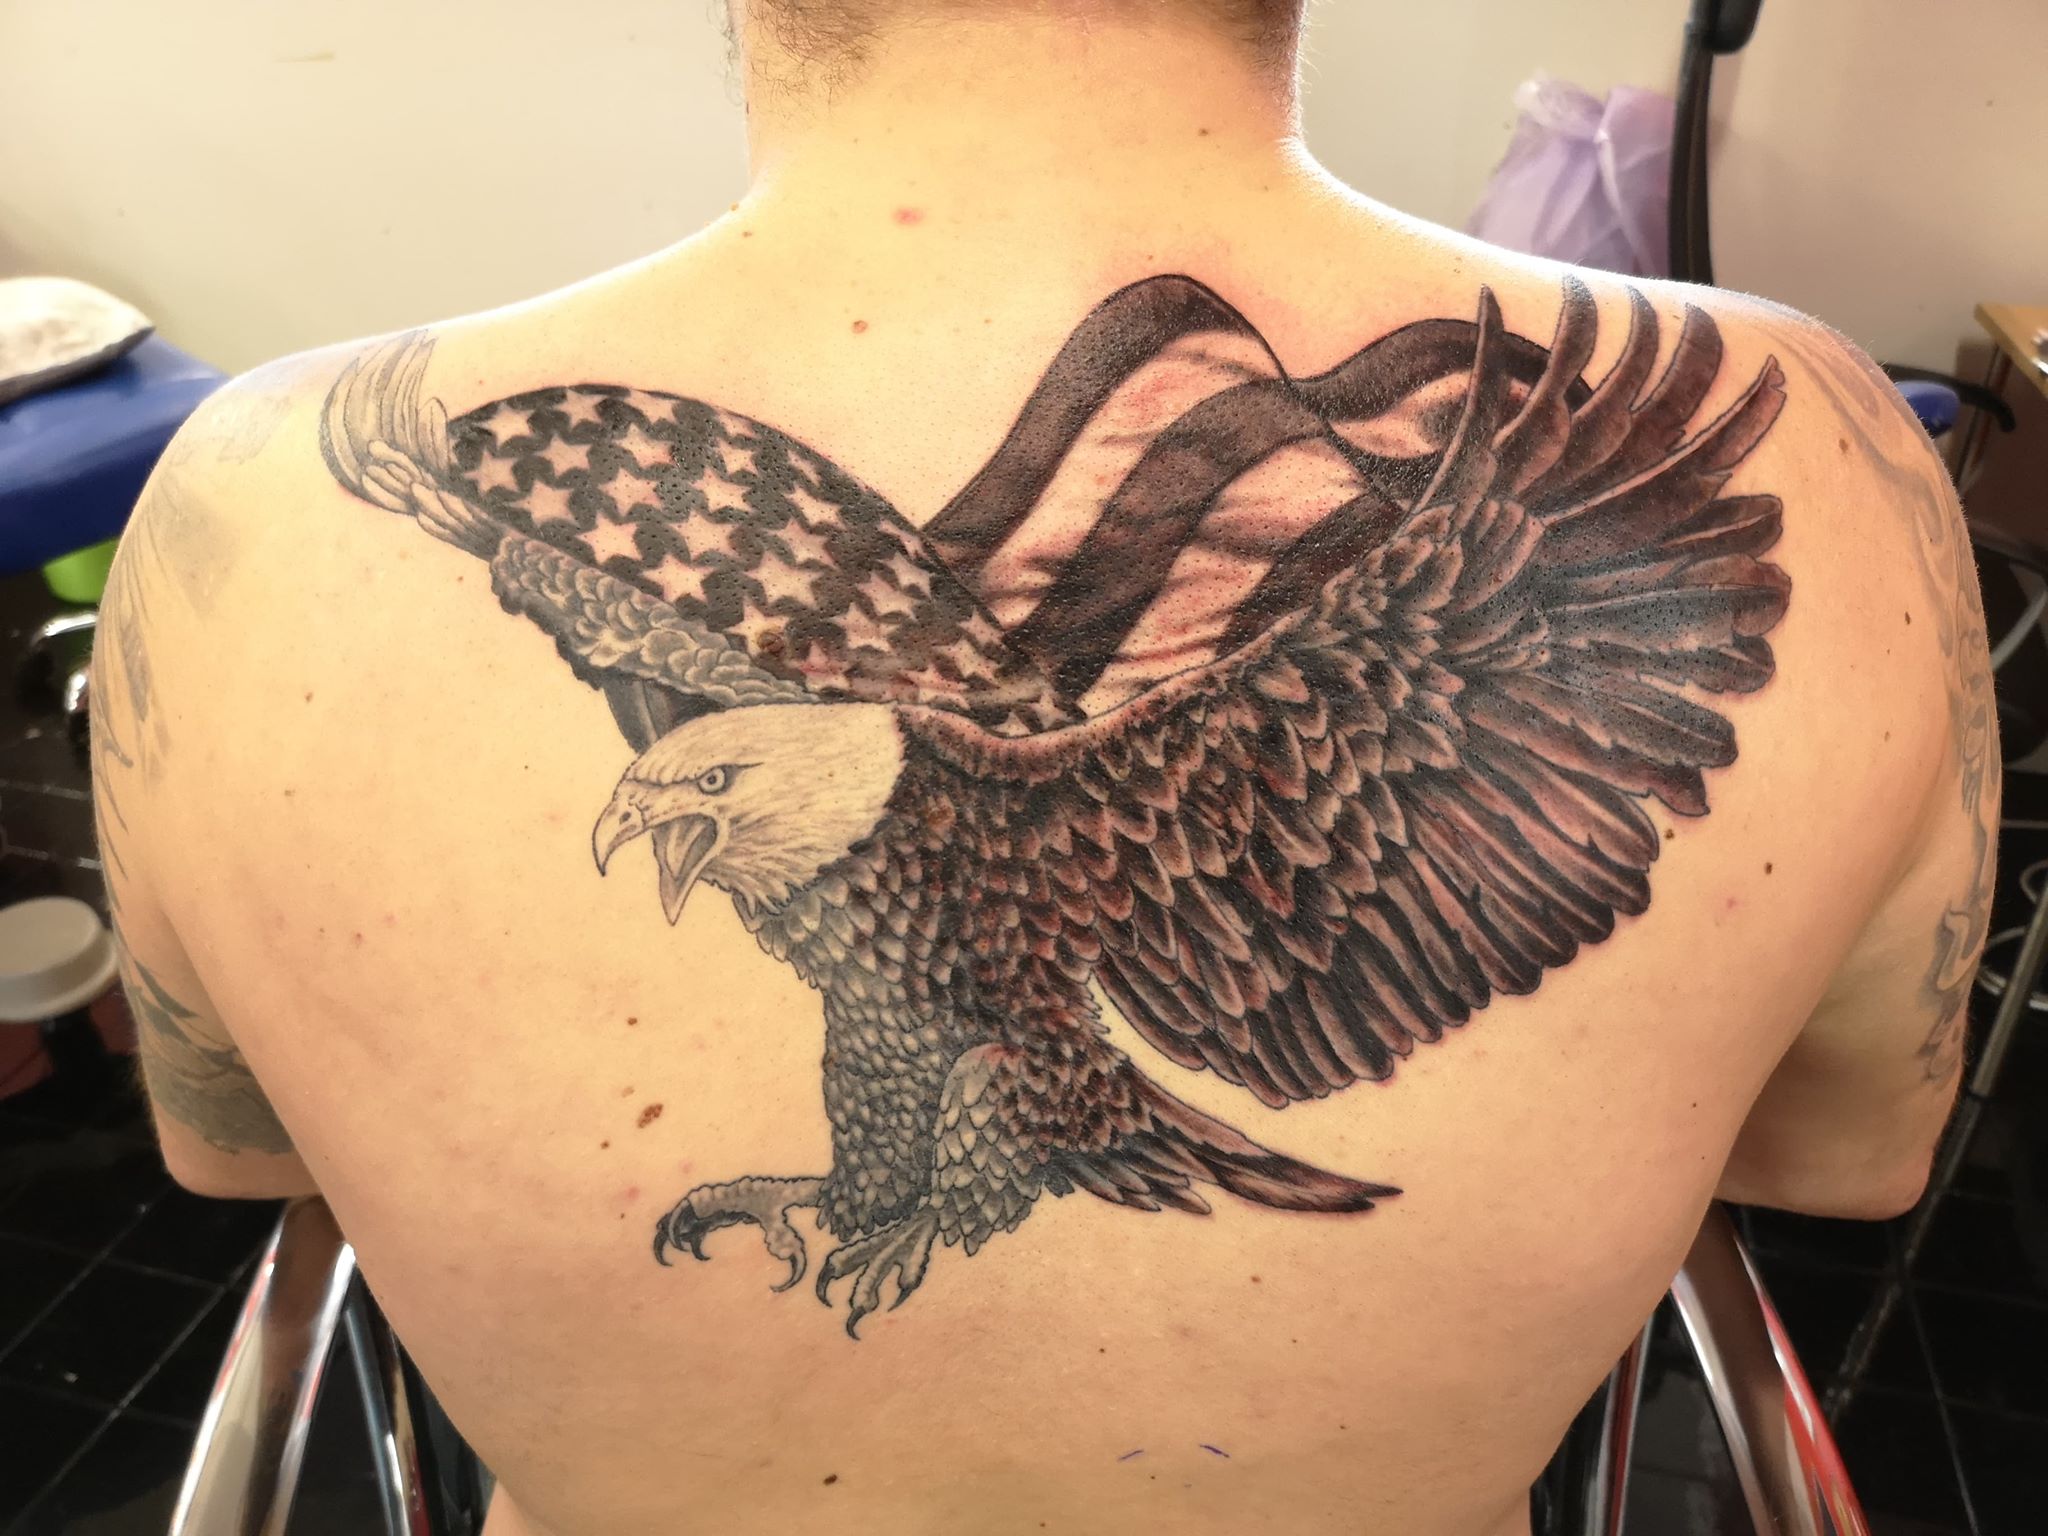 Eagle/American flag